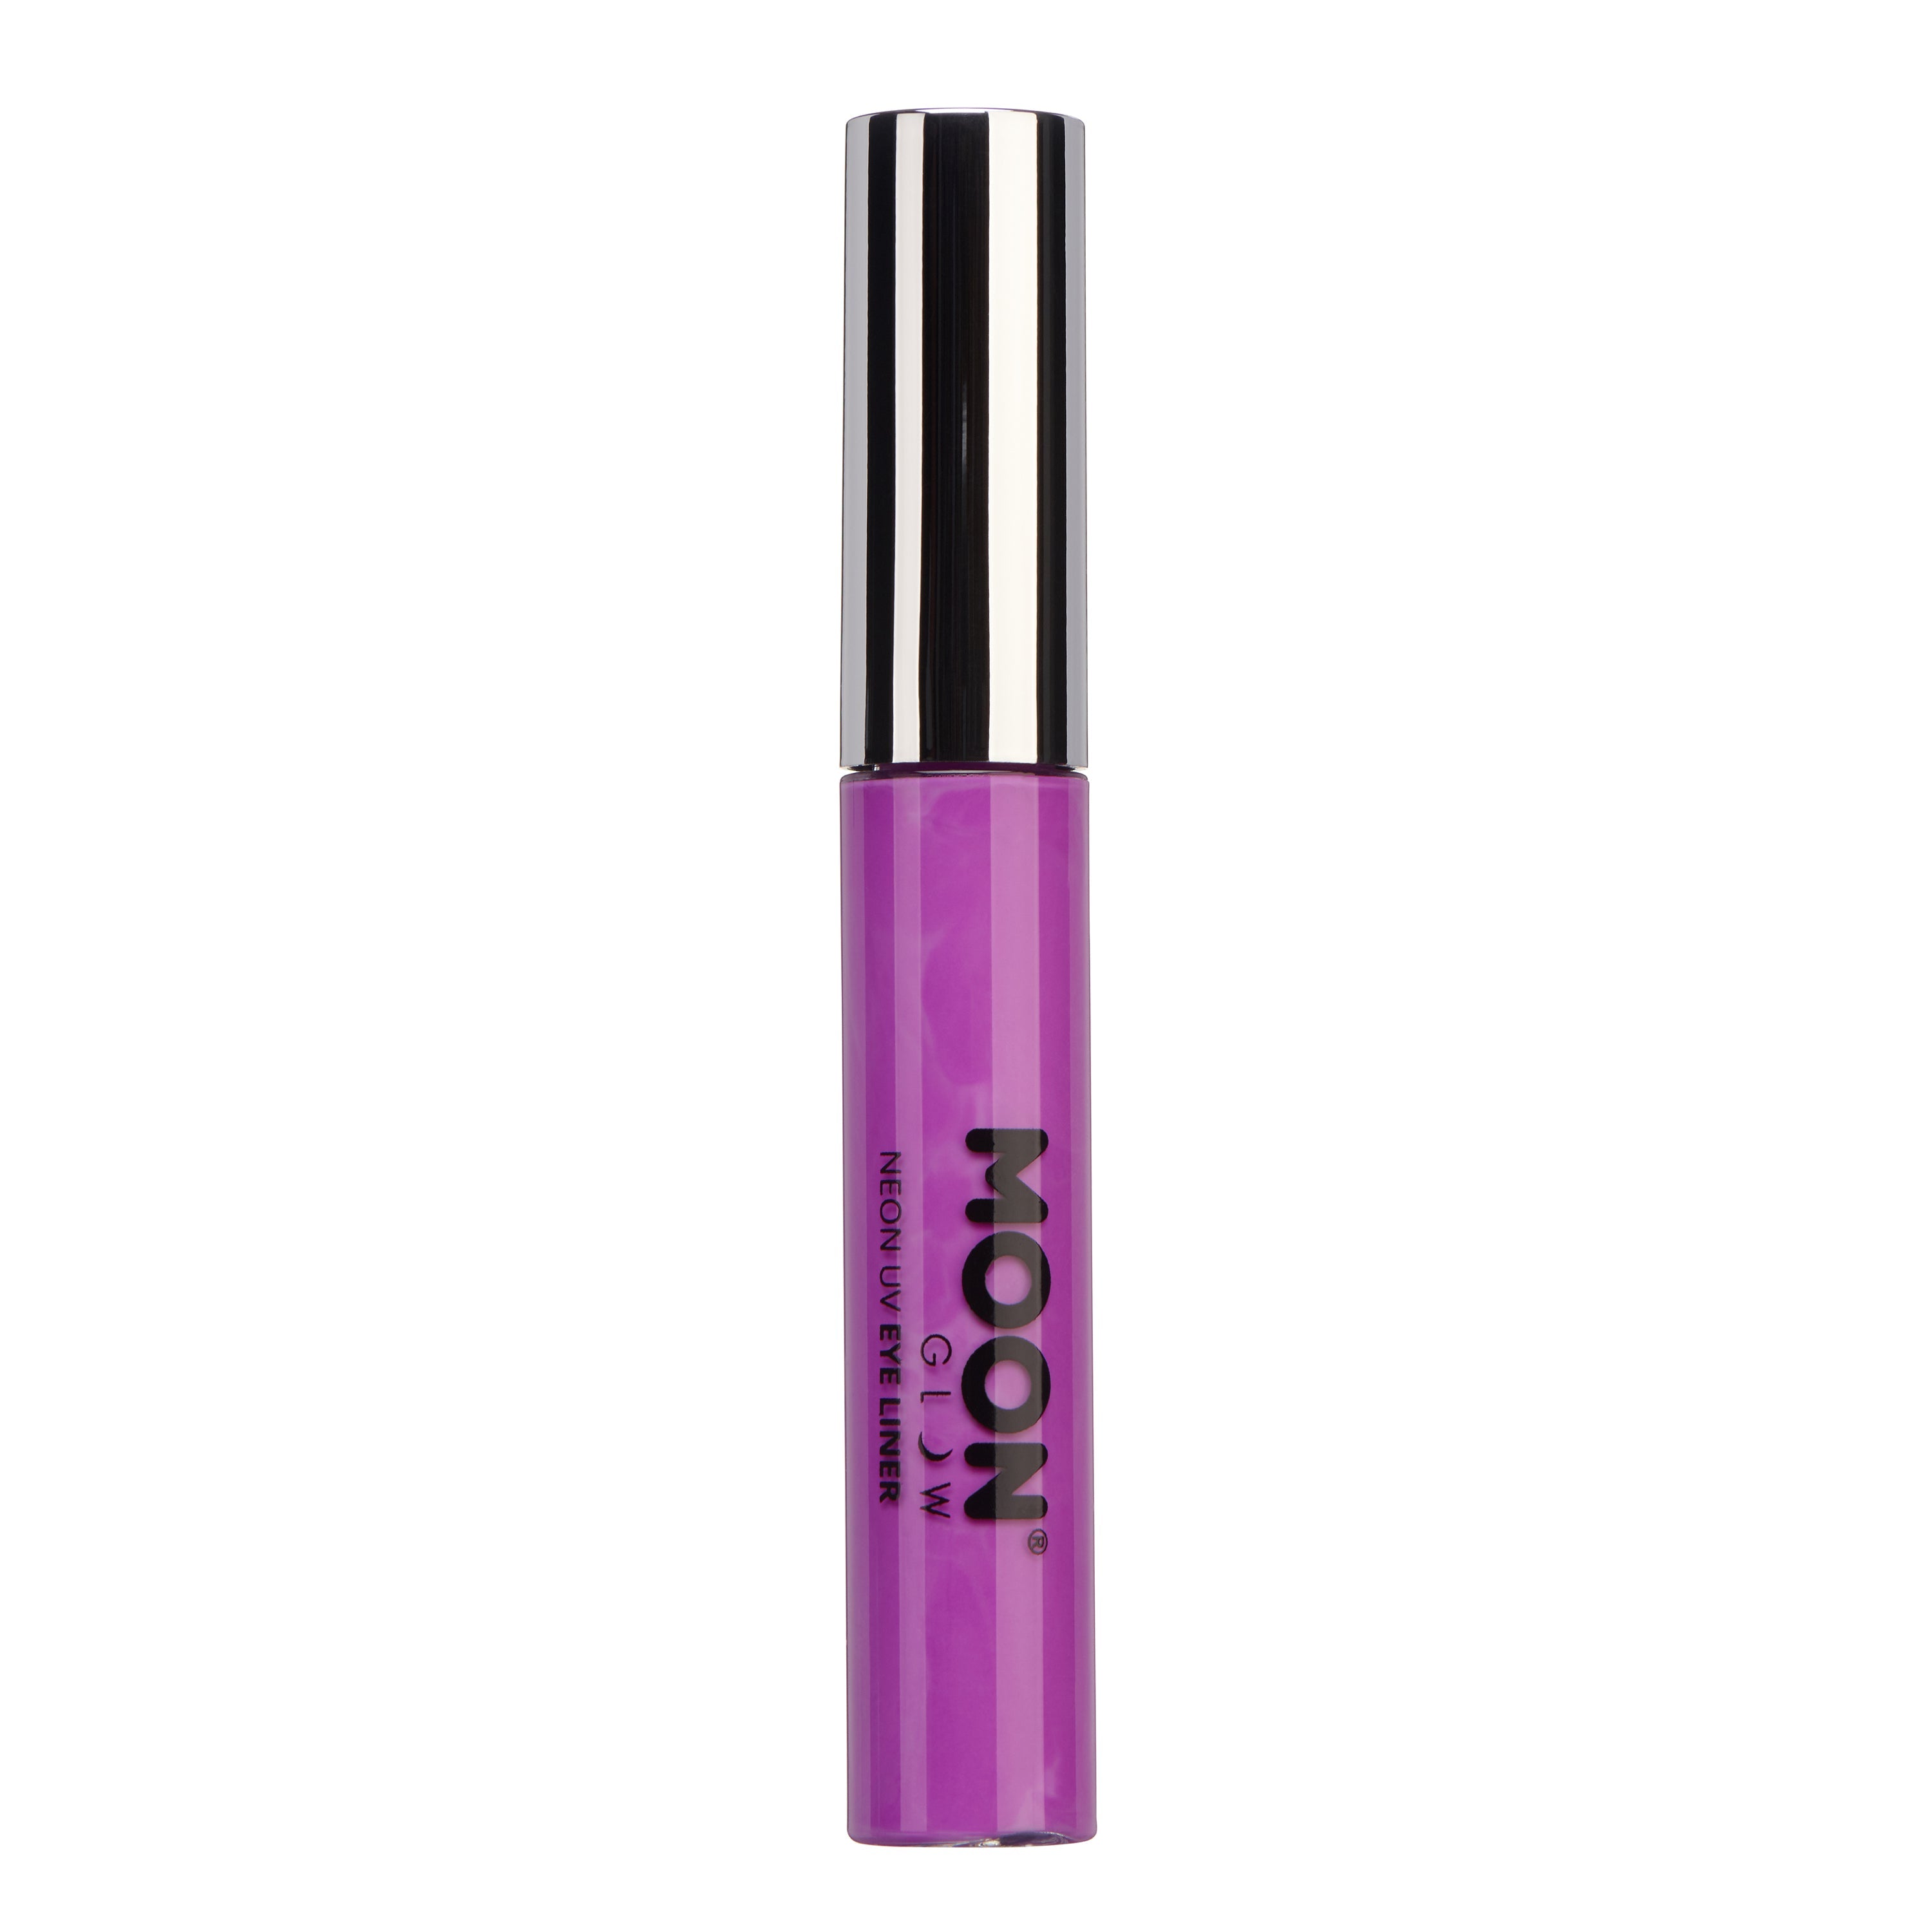 Intense Purple - Neon UV Glow Blacklight Eyeliner, 10mL. Cosmetically certified, FDA & Health Canada compliant, cruelty free and vegan.